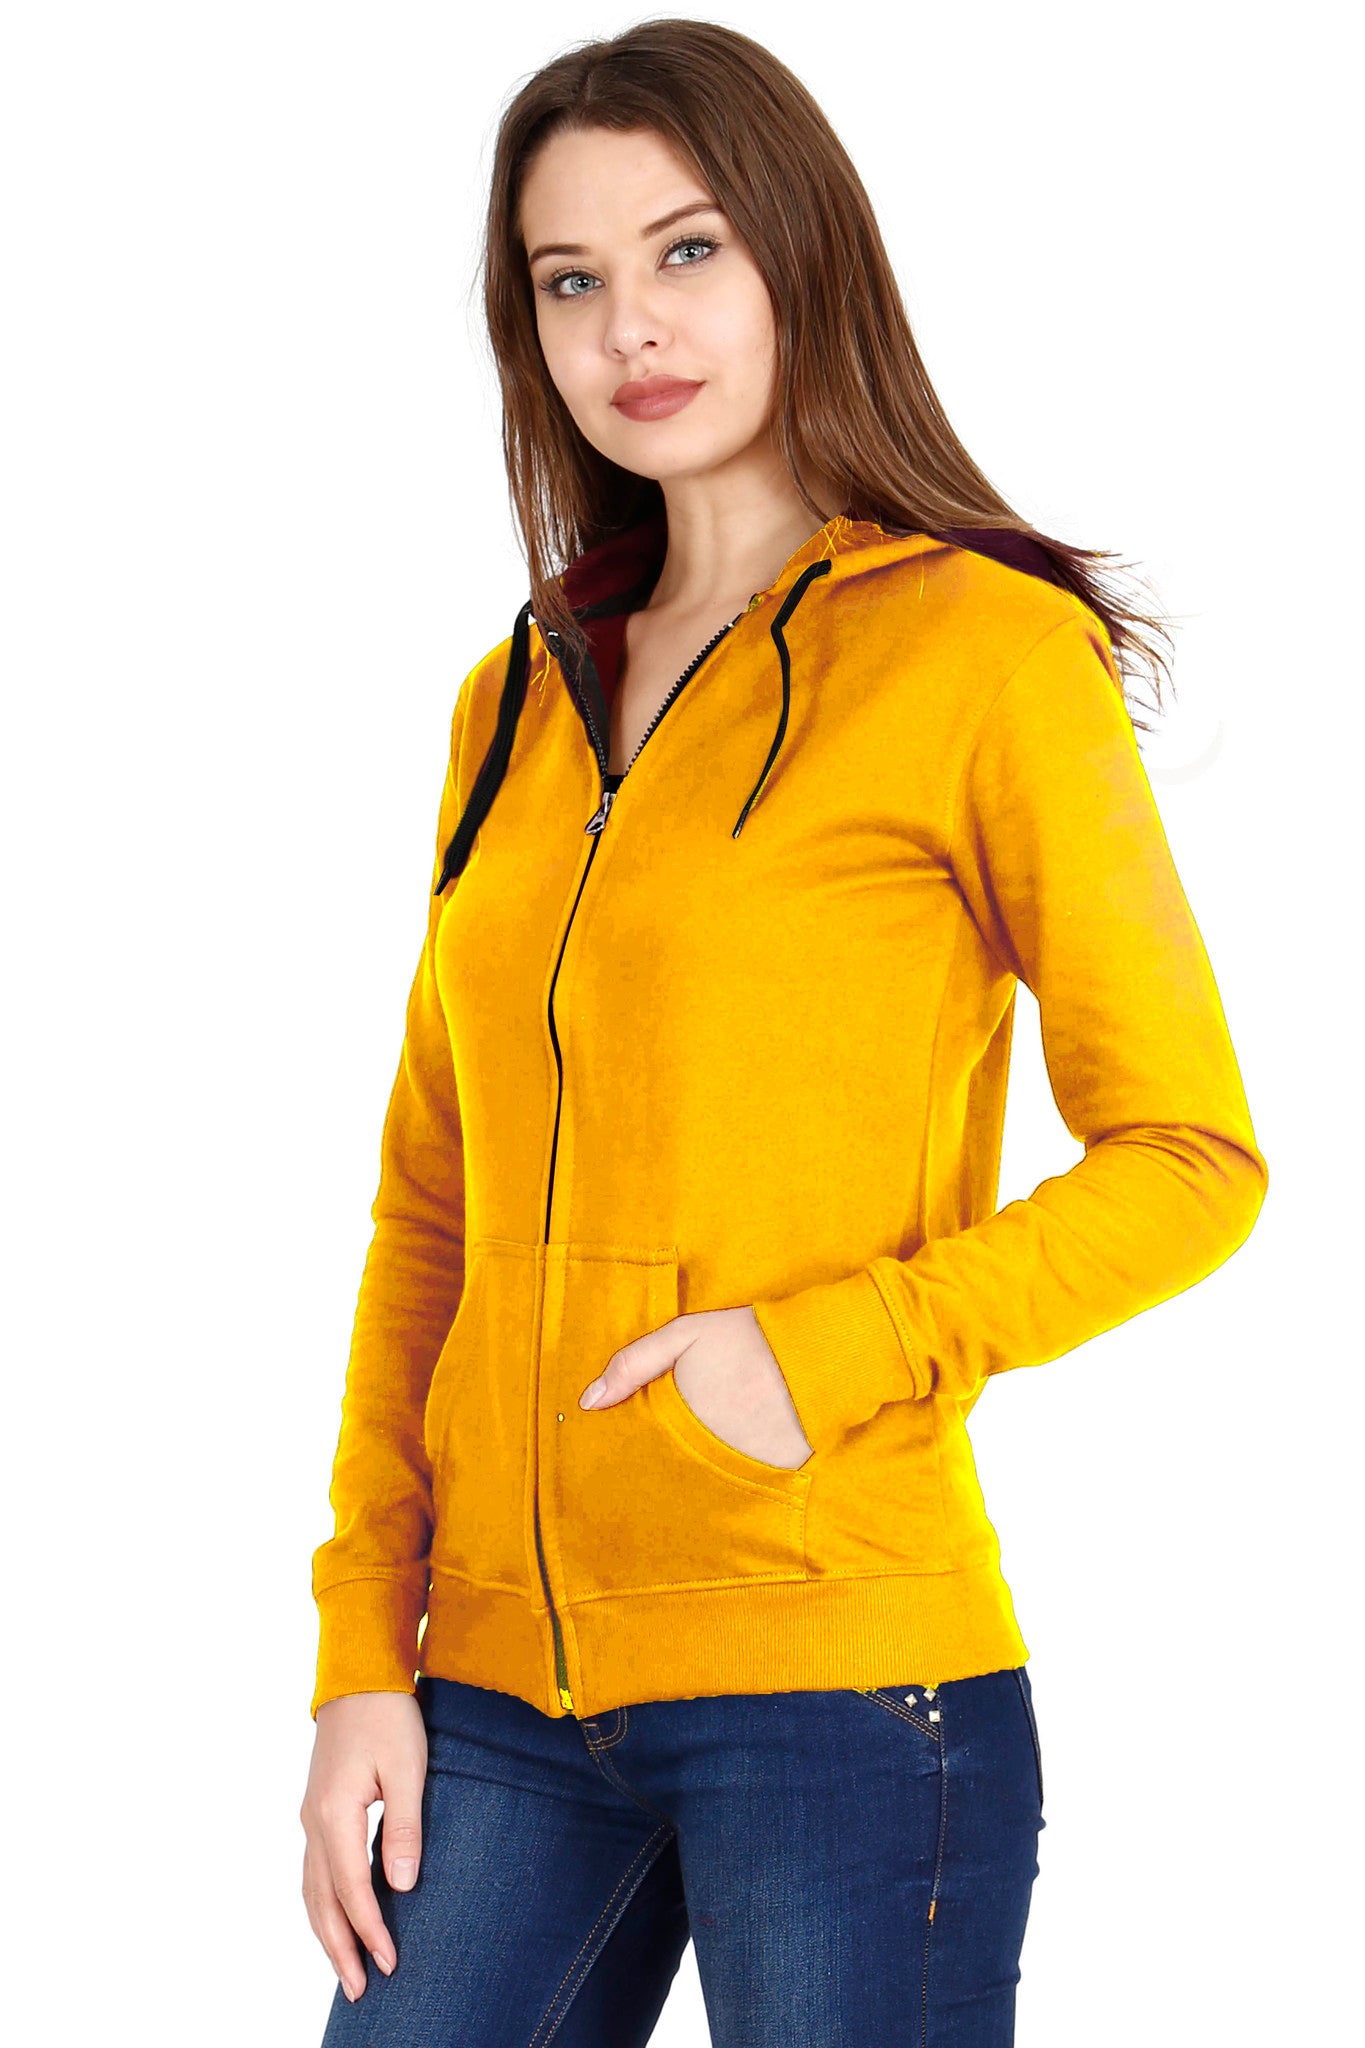 Women's Cotton Plain Full Sleeve Mustard Yellow Color Hoodies/Sweatshirt